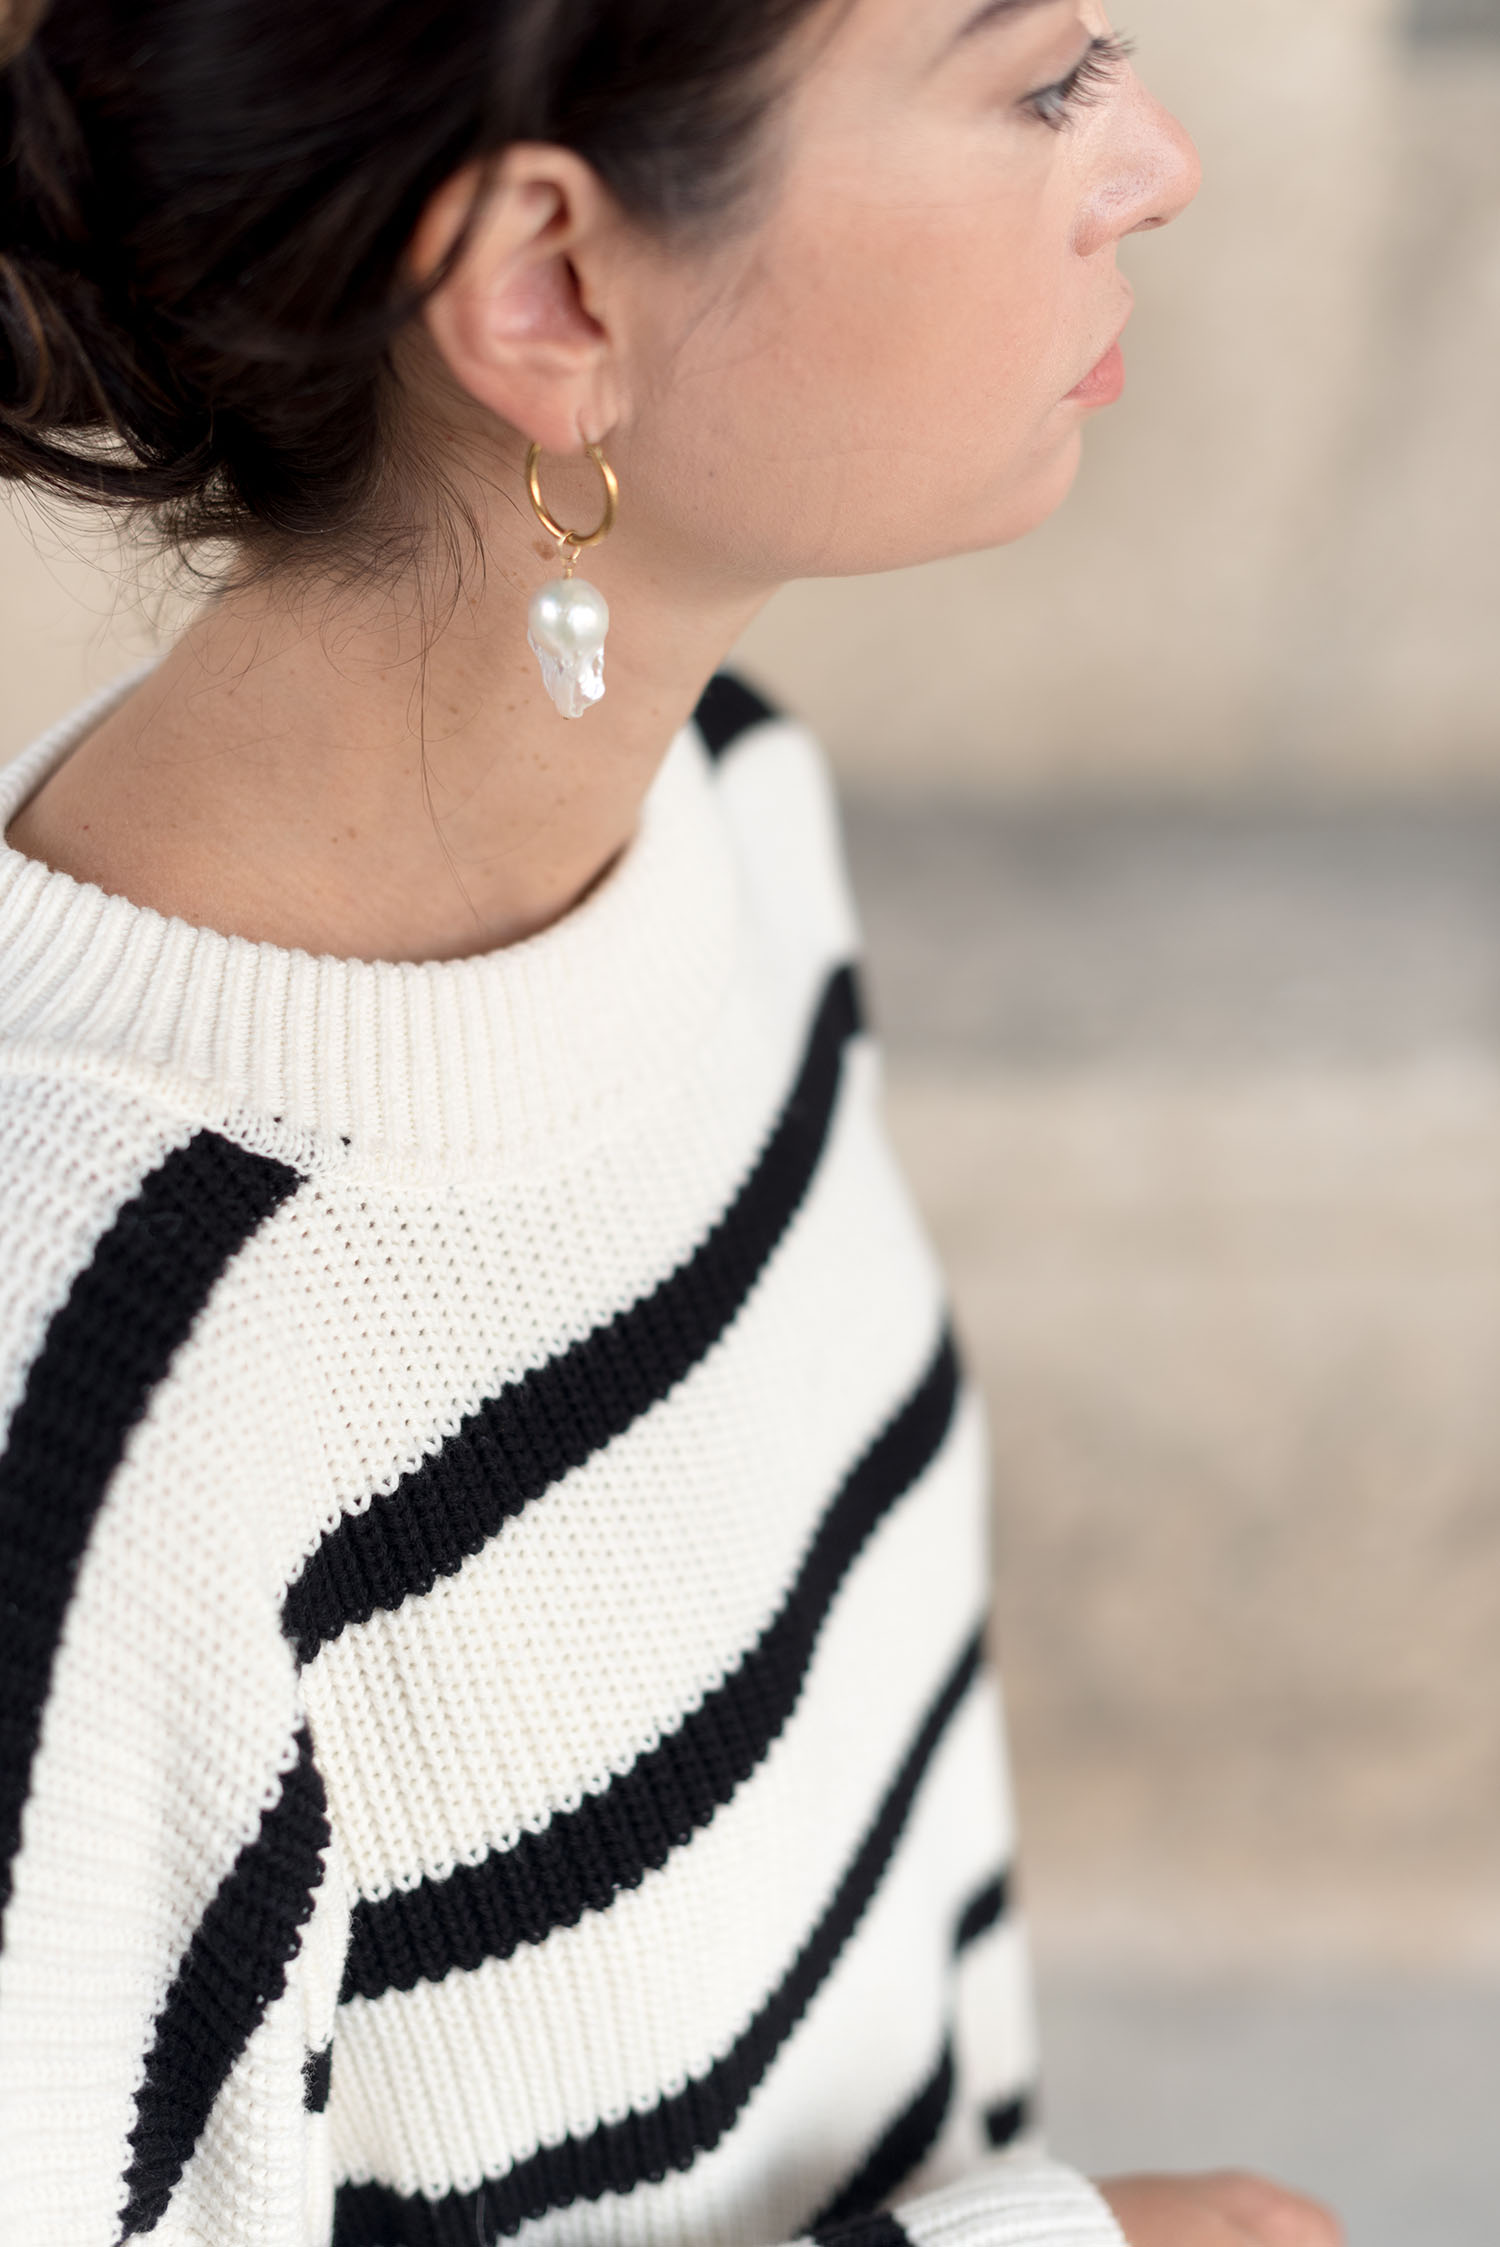 Coco & Vera - Maris Pearl Co. earrings, H&M sweater